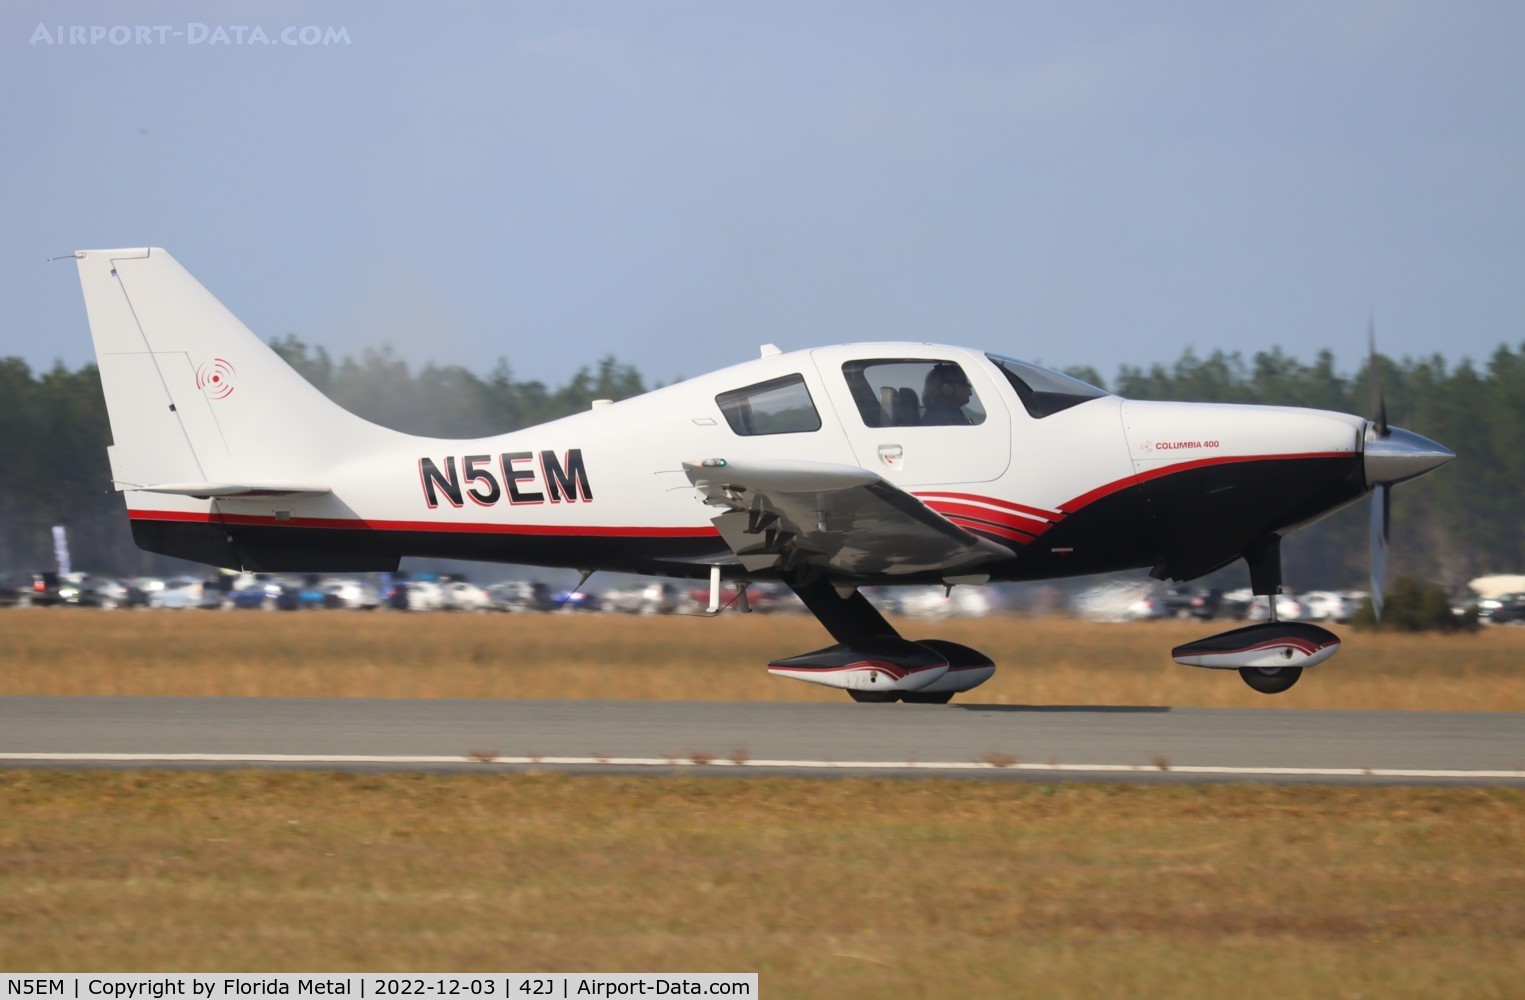 N5EM, 2006 Columbia Aircraft Mfg LC41-550FG C/N 41592, LC41 zx